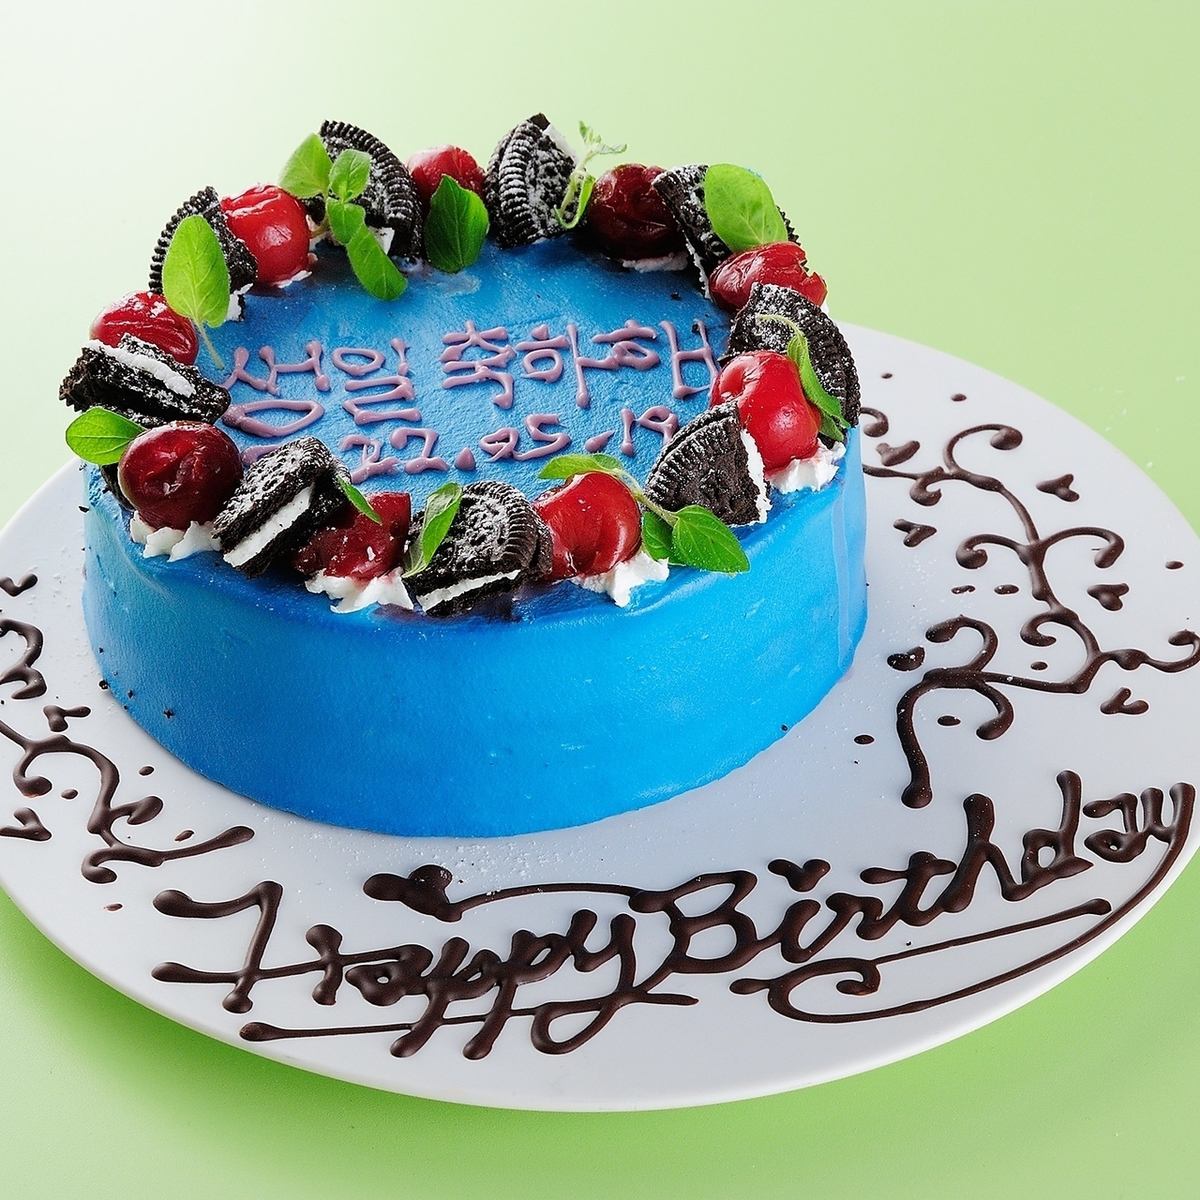 Popular on SNS ★ Celebrate with Senil Cake ♪ Surprise production OK!